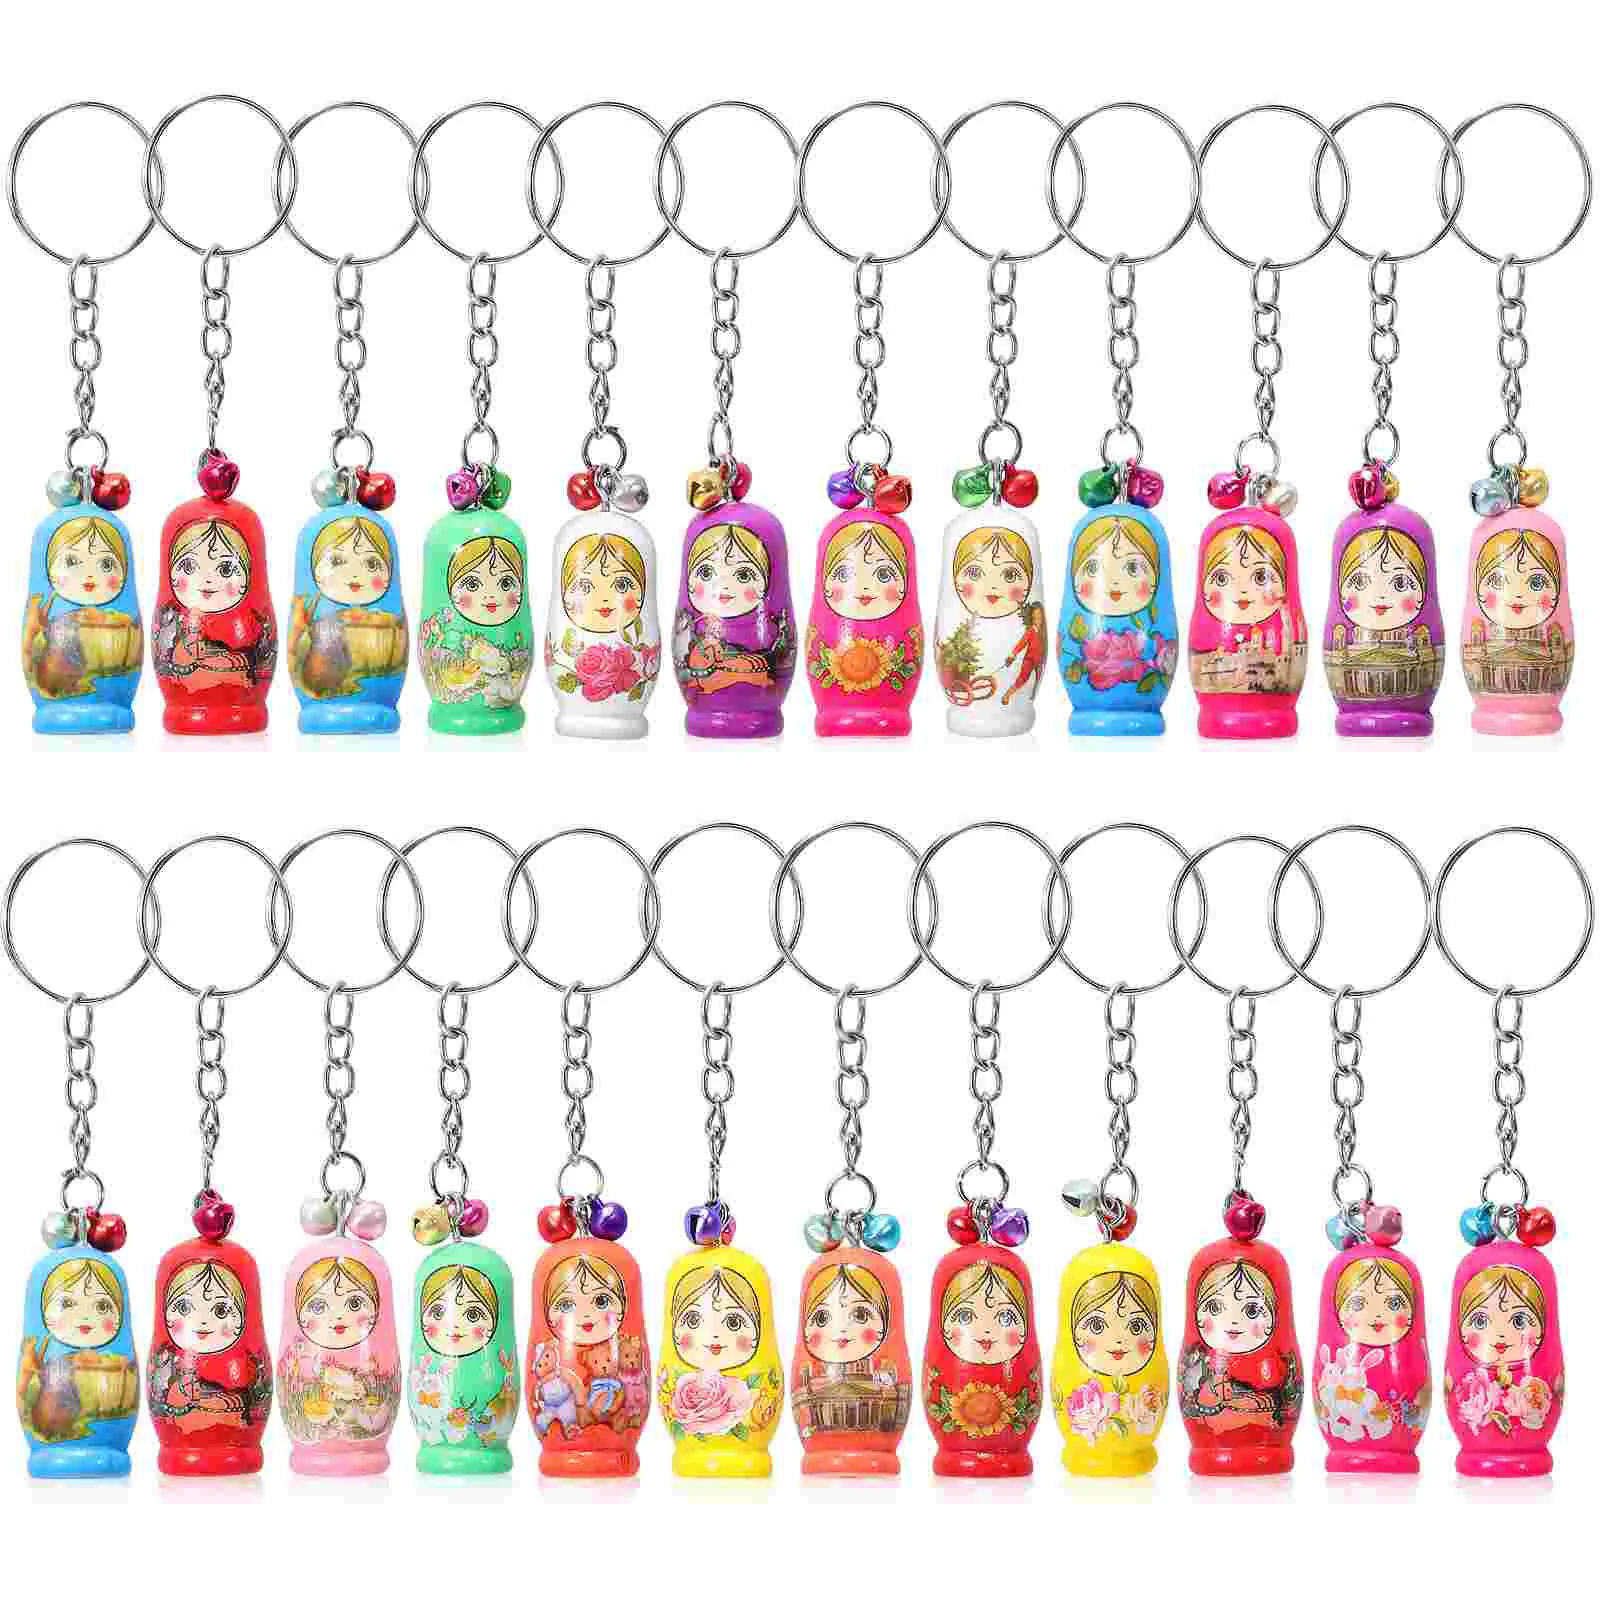 

24 Pcs Keychains Cartoon Painted Russian Nesting Dolls Pendants with Keyrings Handbag Decors Hanging Charms for Keys Purses Bags